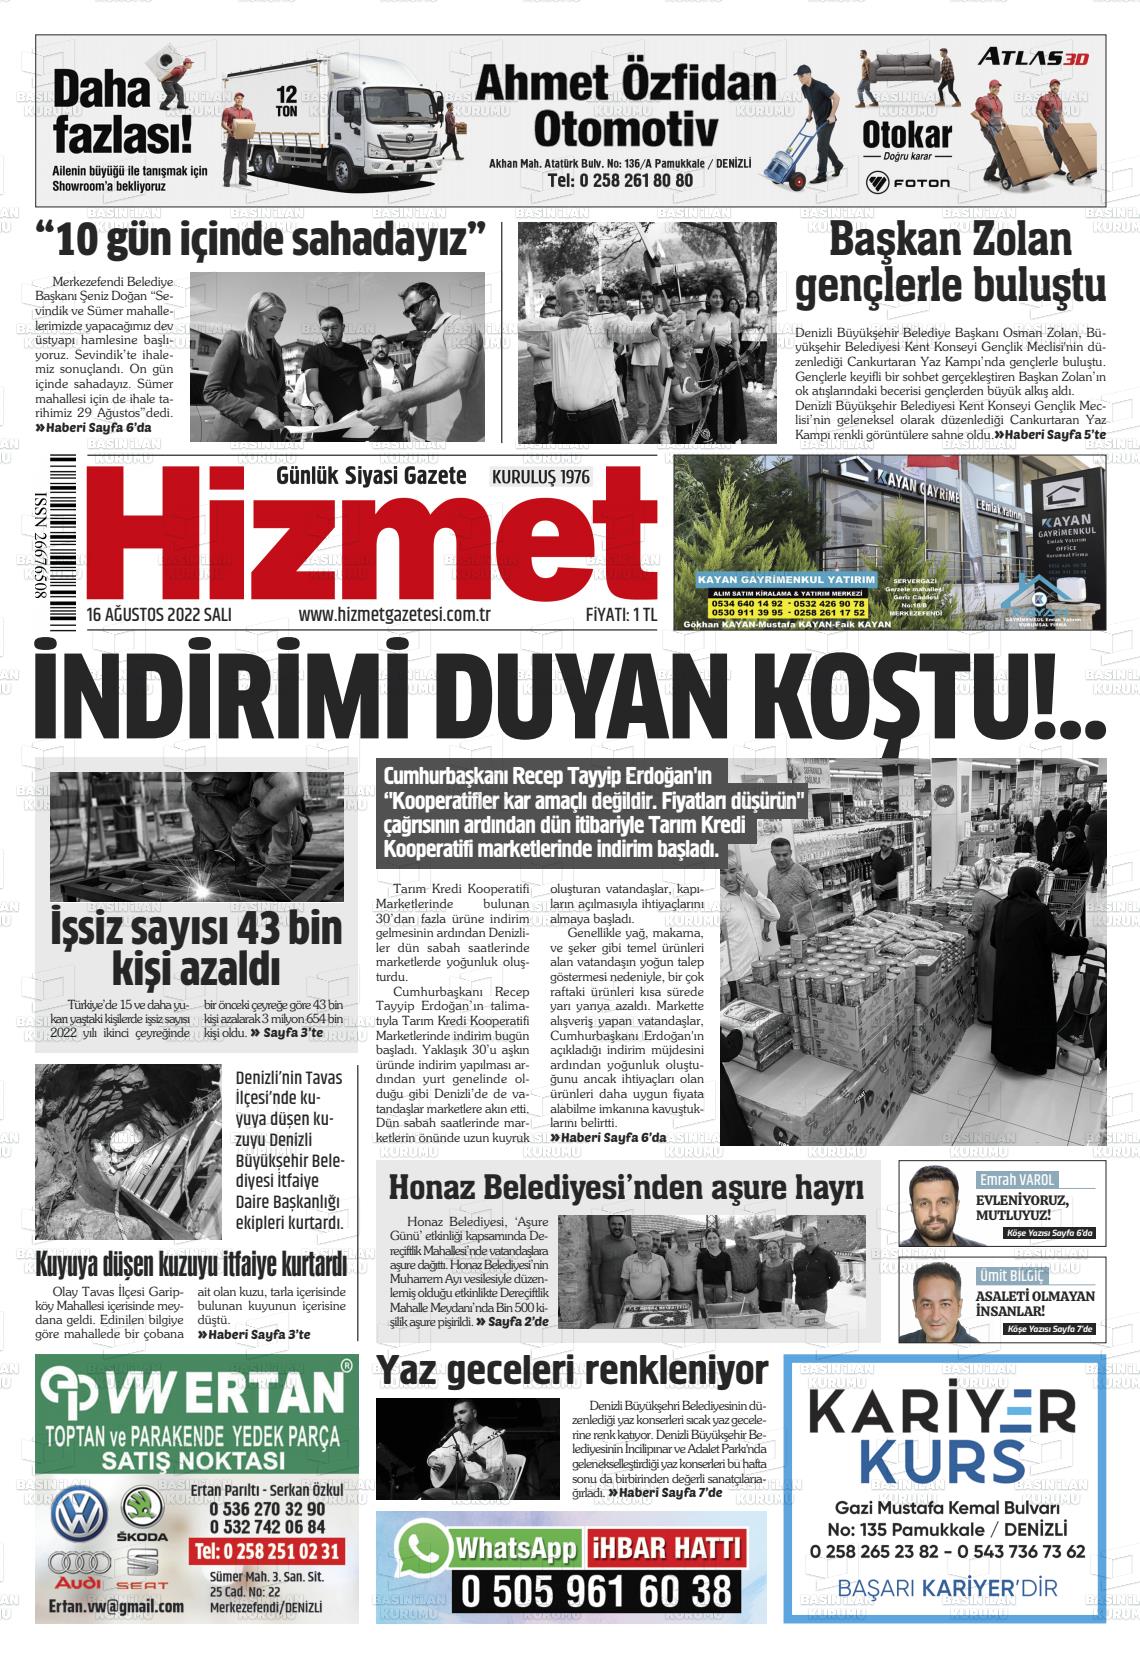 16 Ağustos 2022 Hizmet Gazete Manşeti